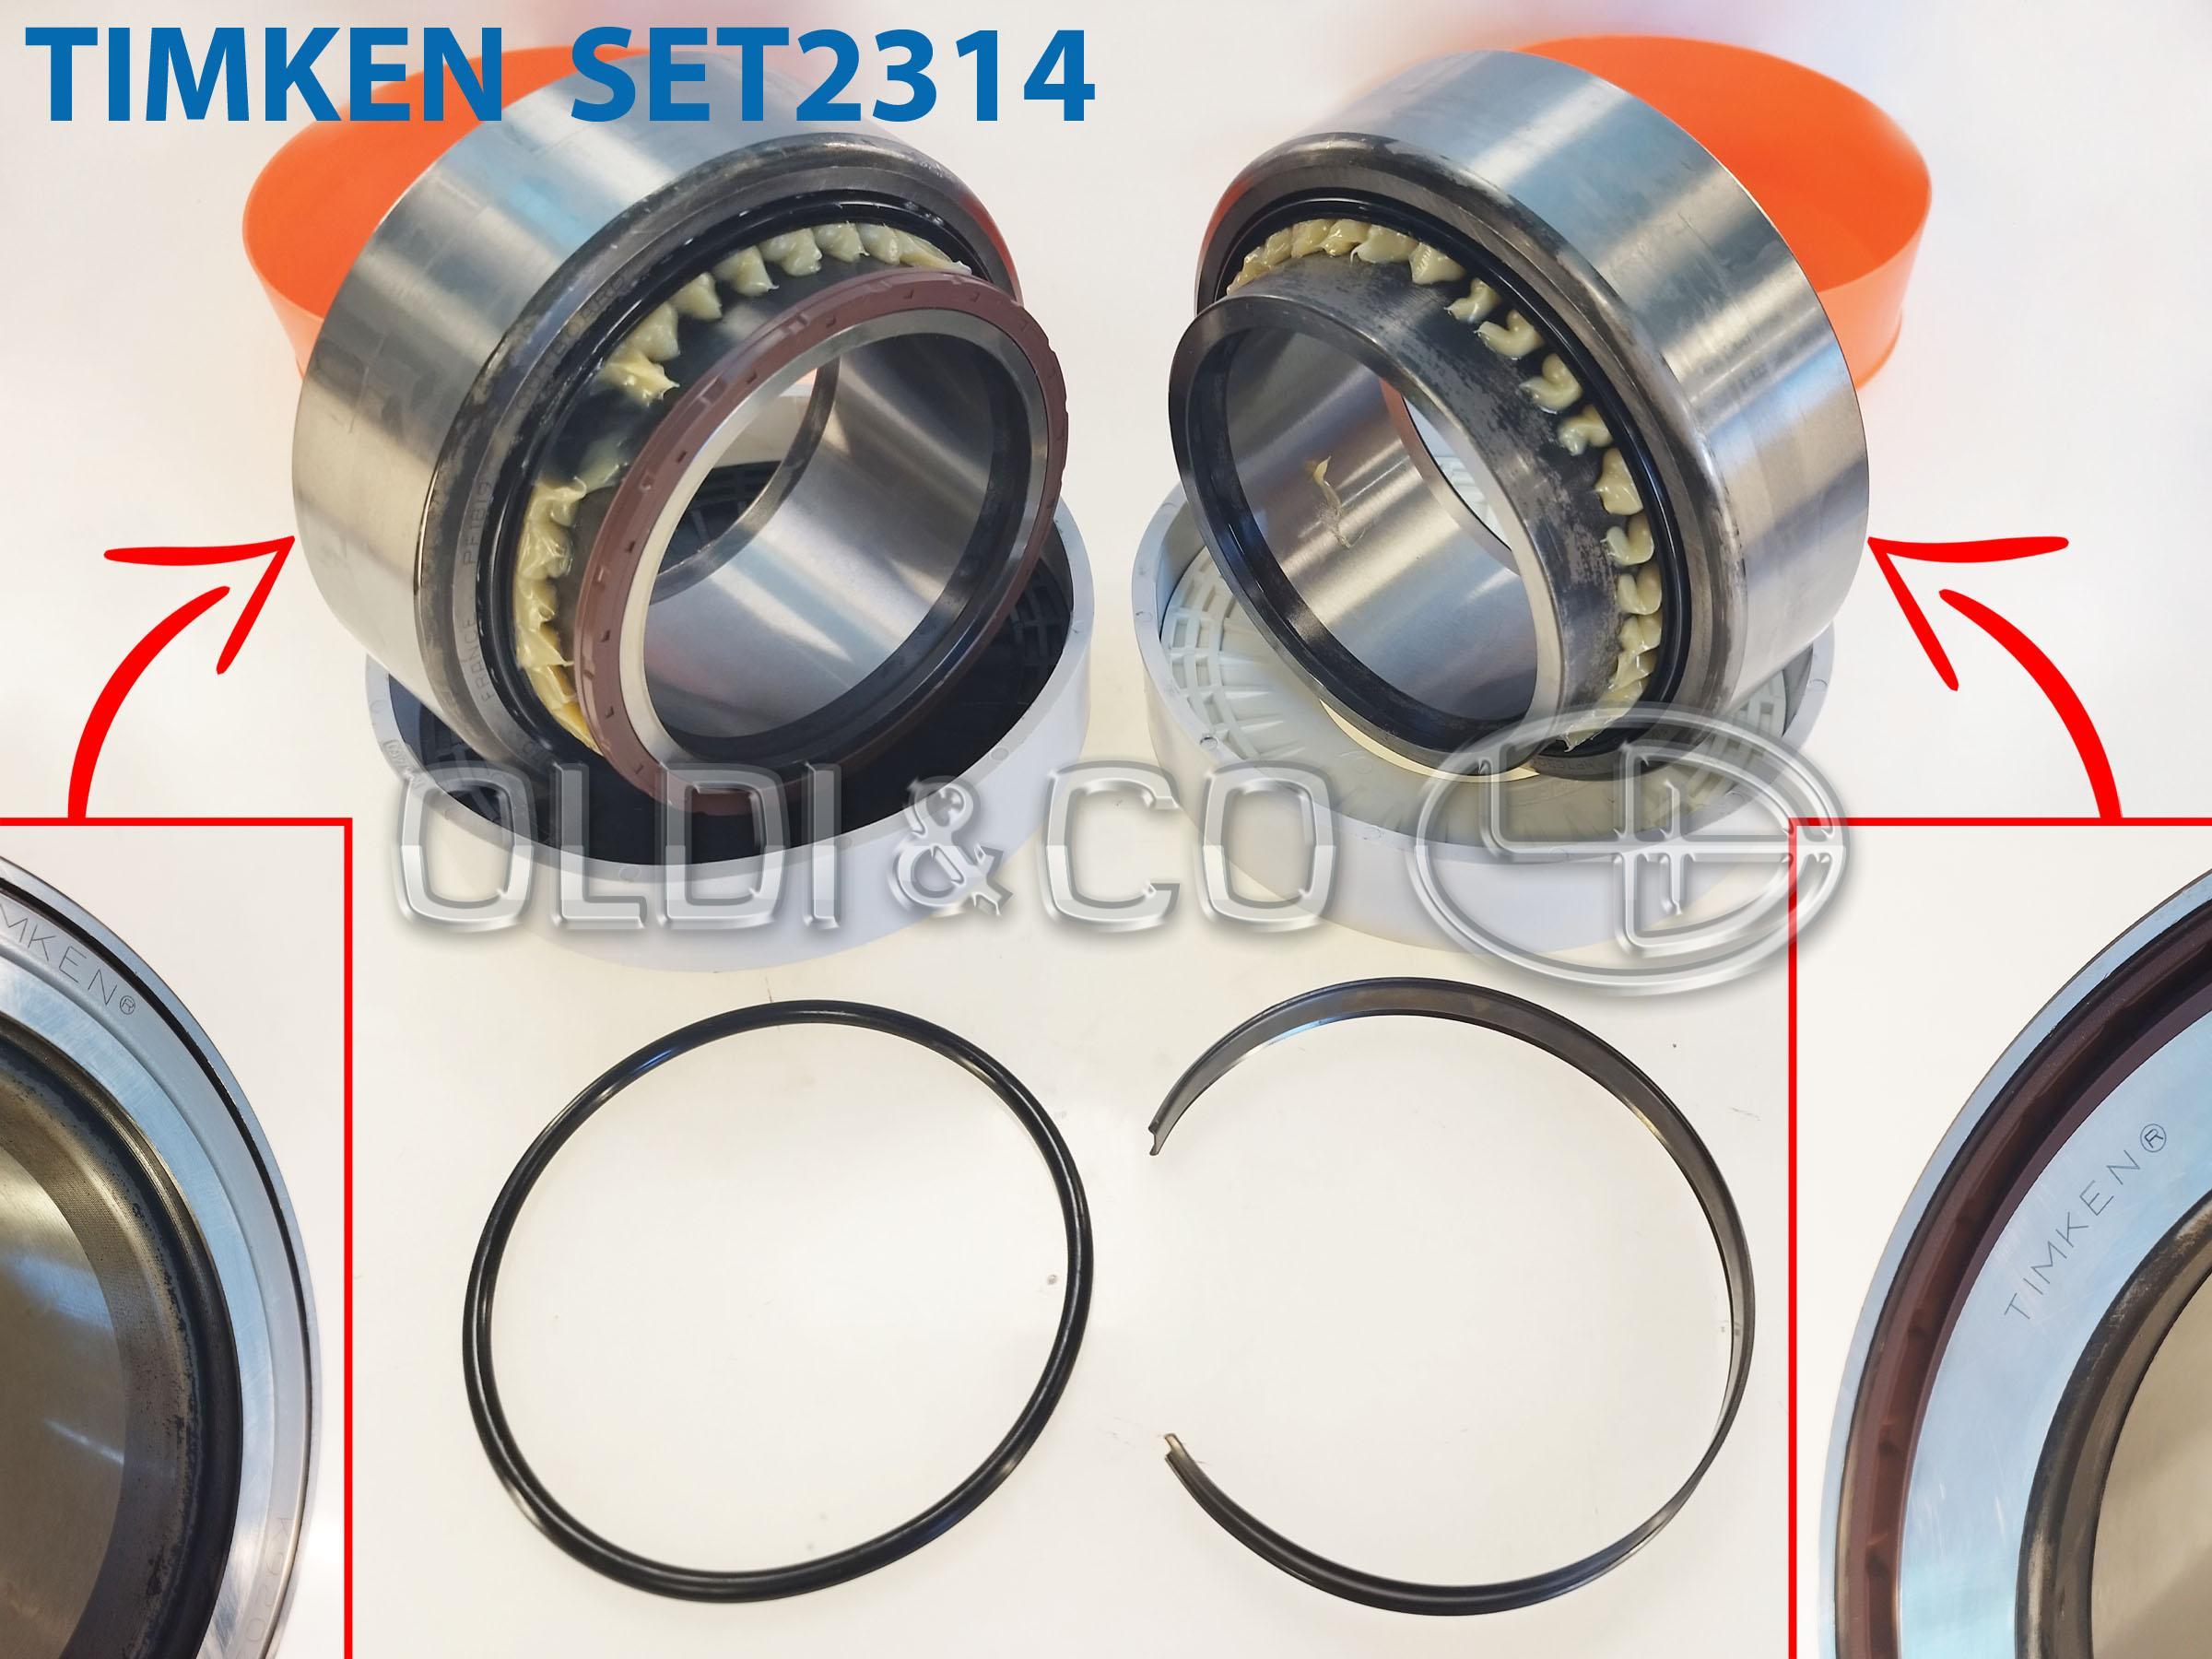 34.110.32002 Suspension parts → Hub rep. kit - bearings/seals